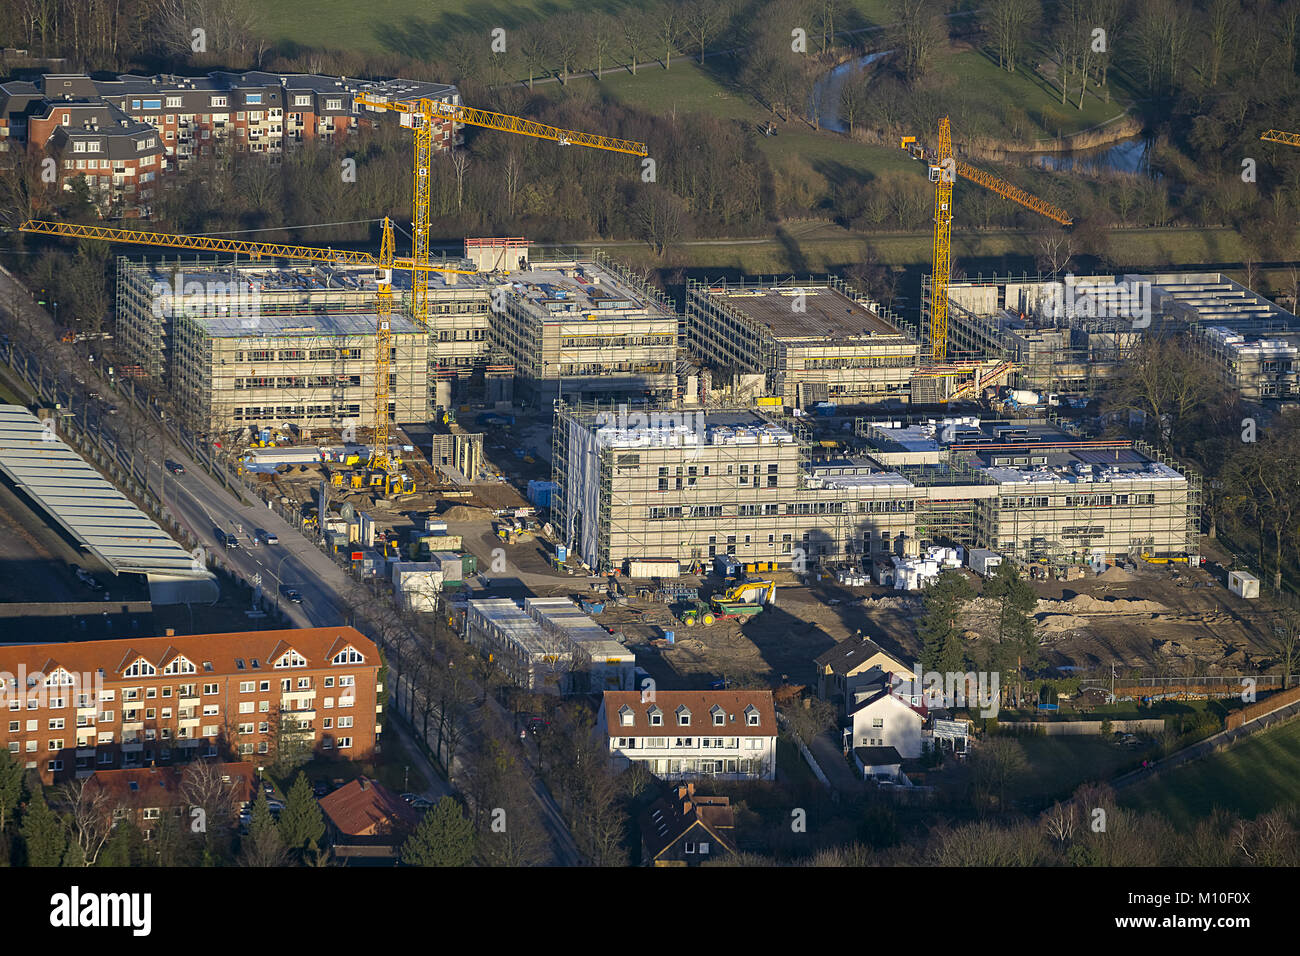 Aerial view, HSLH Hamm, university location, Hamm, Ruhr area, North Rhine-Westphalia, Germany, Europe, birds-eyes view, aerial view, aerial photograph Stock Photo